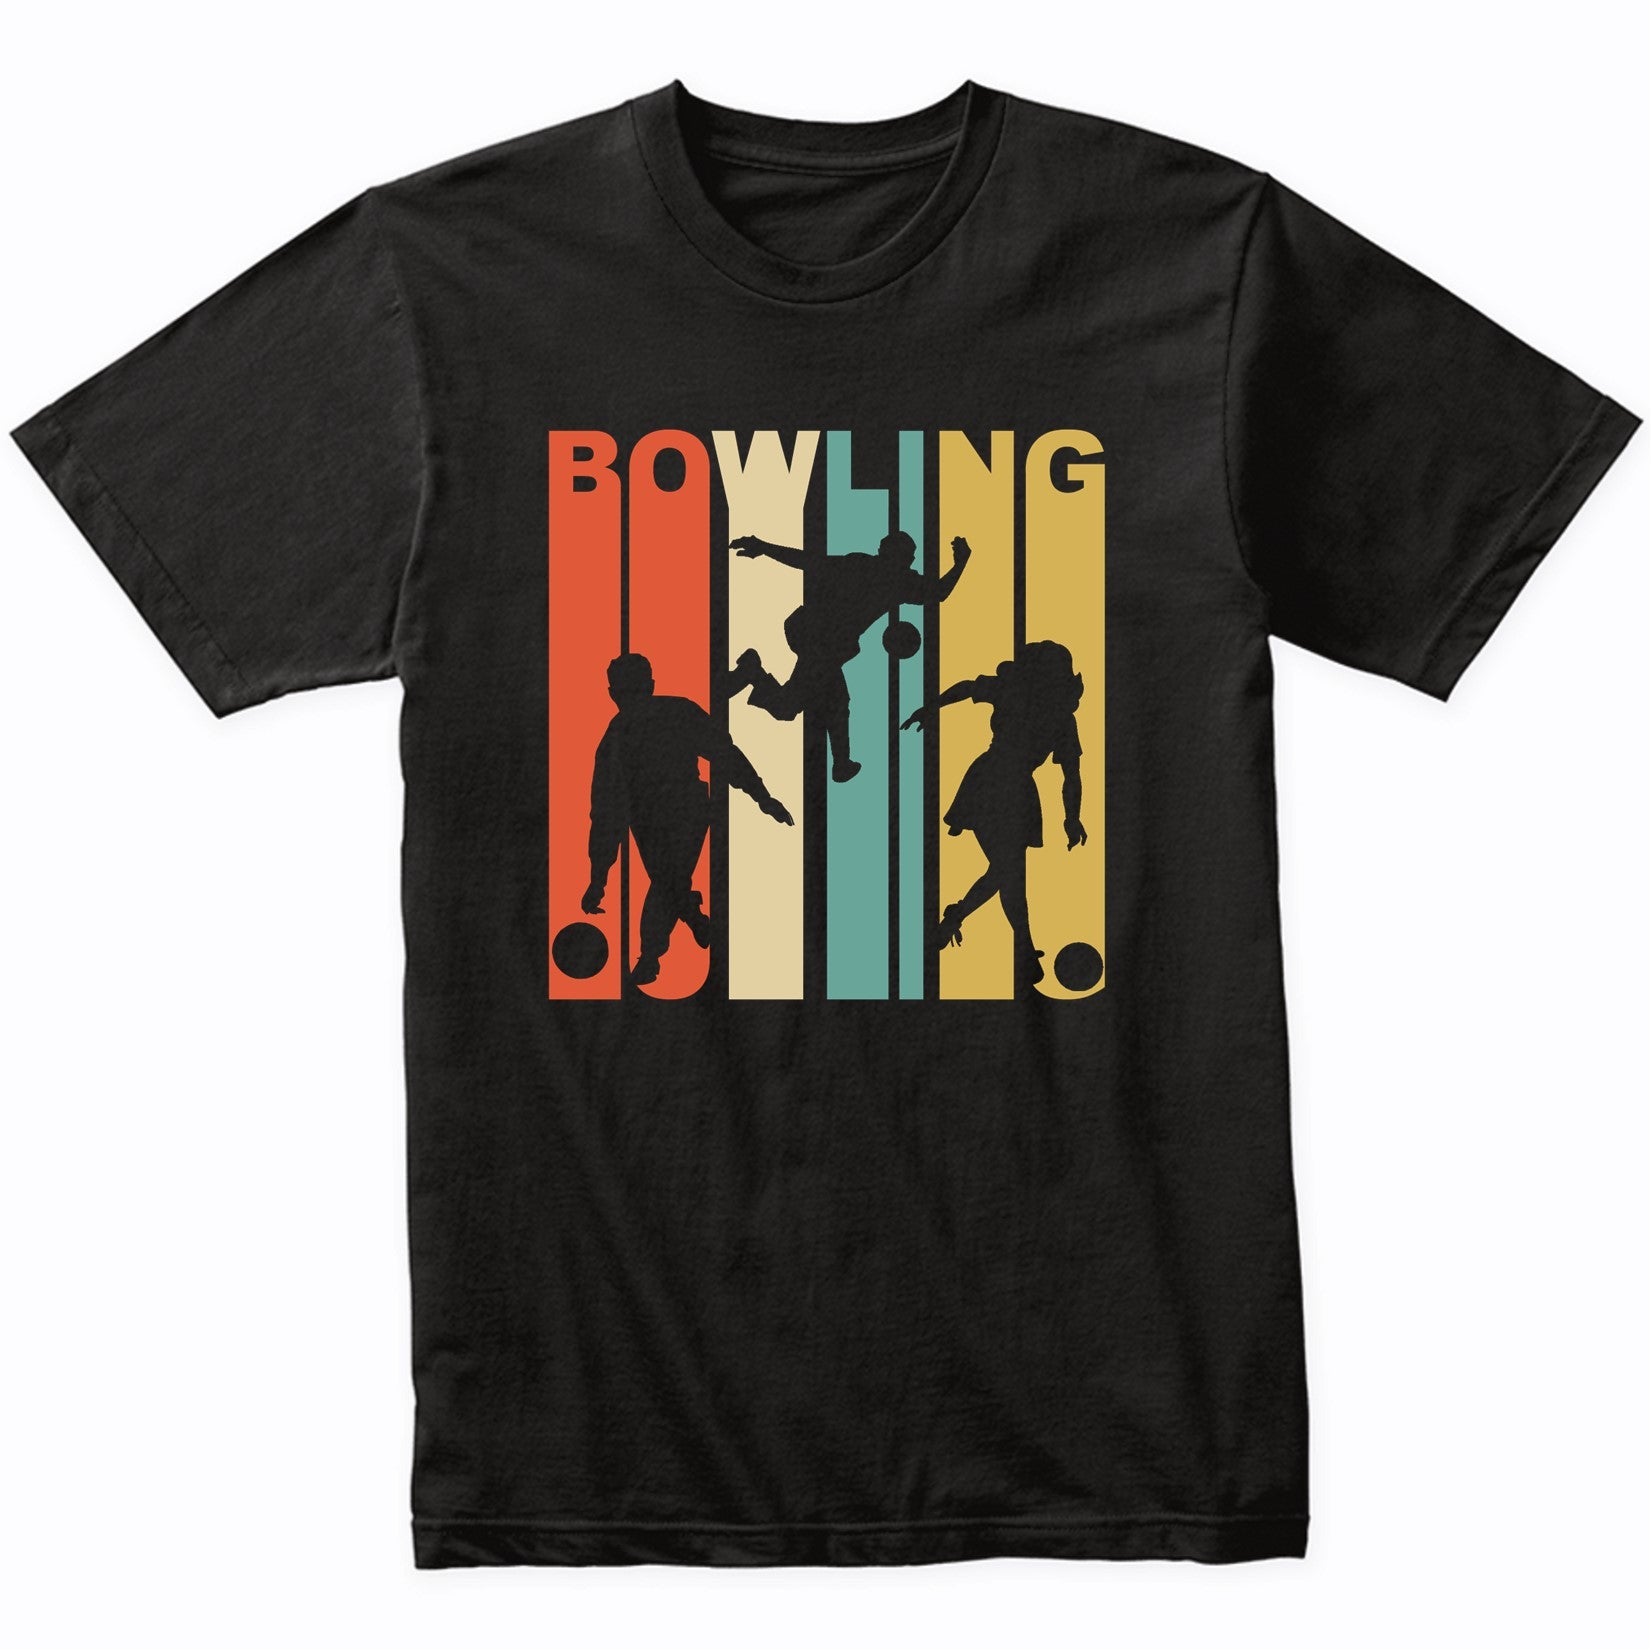 Vintage Retro 1970's Style Bowling T-Shirt